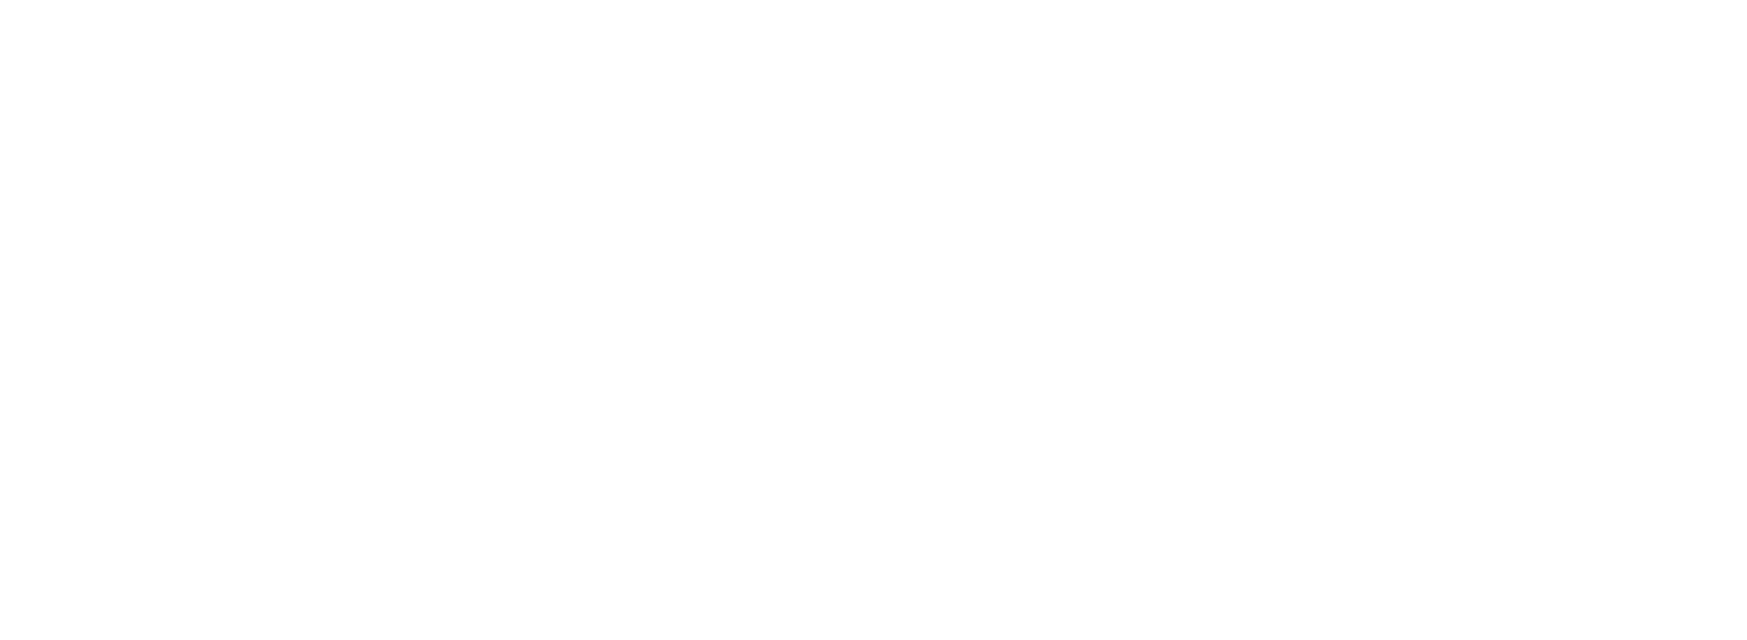 Black Apple New York Logo PNG image